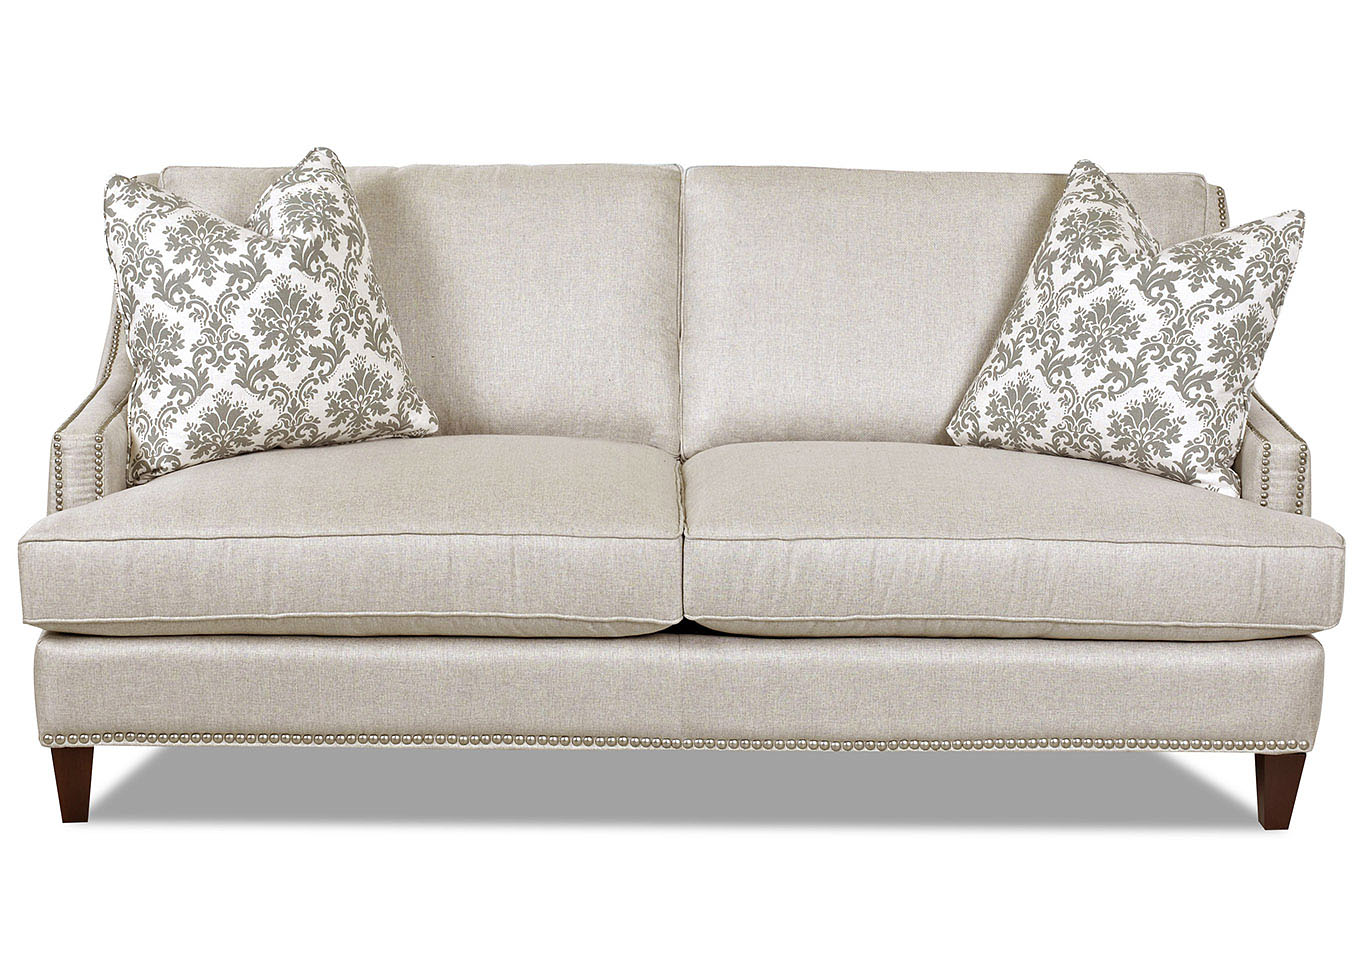 Duchess Bliss Linen Stationary Fabric Sofa,Klaussner Home Furnishings